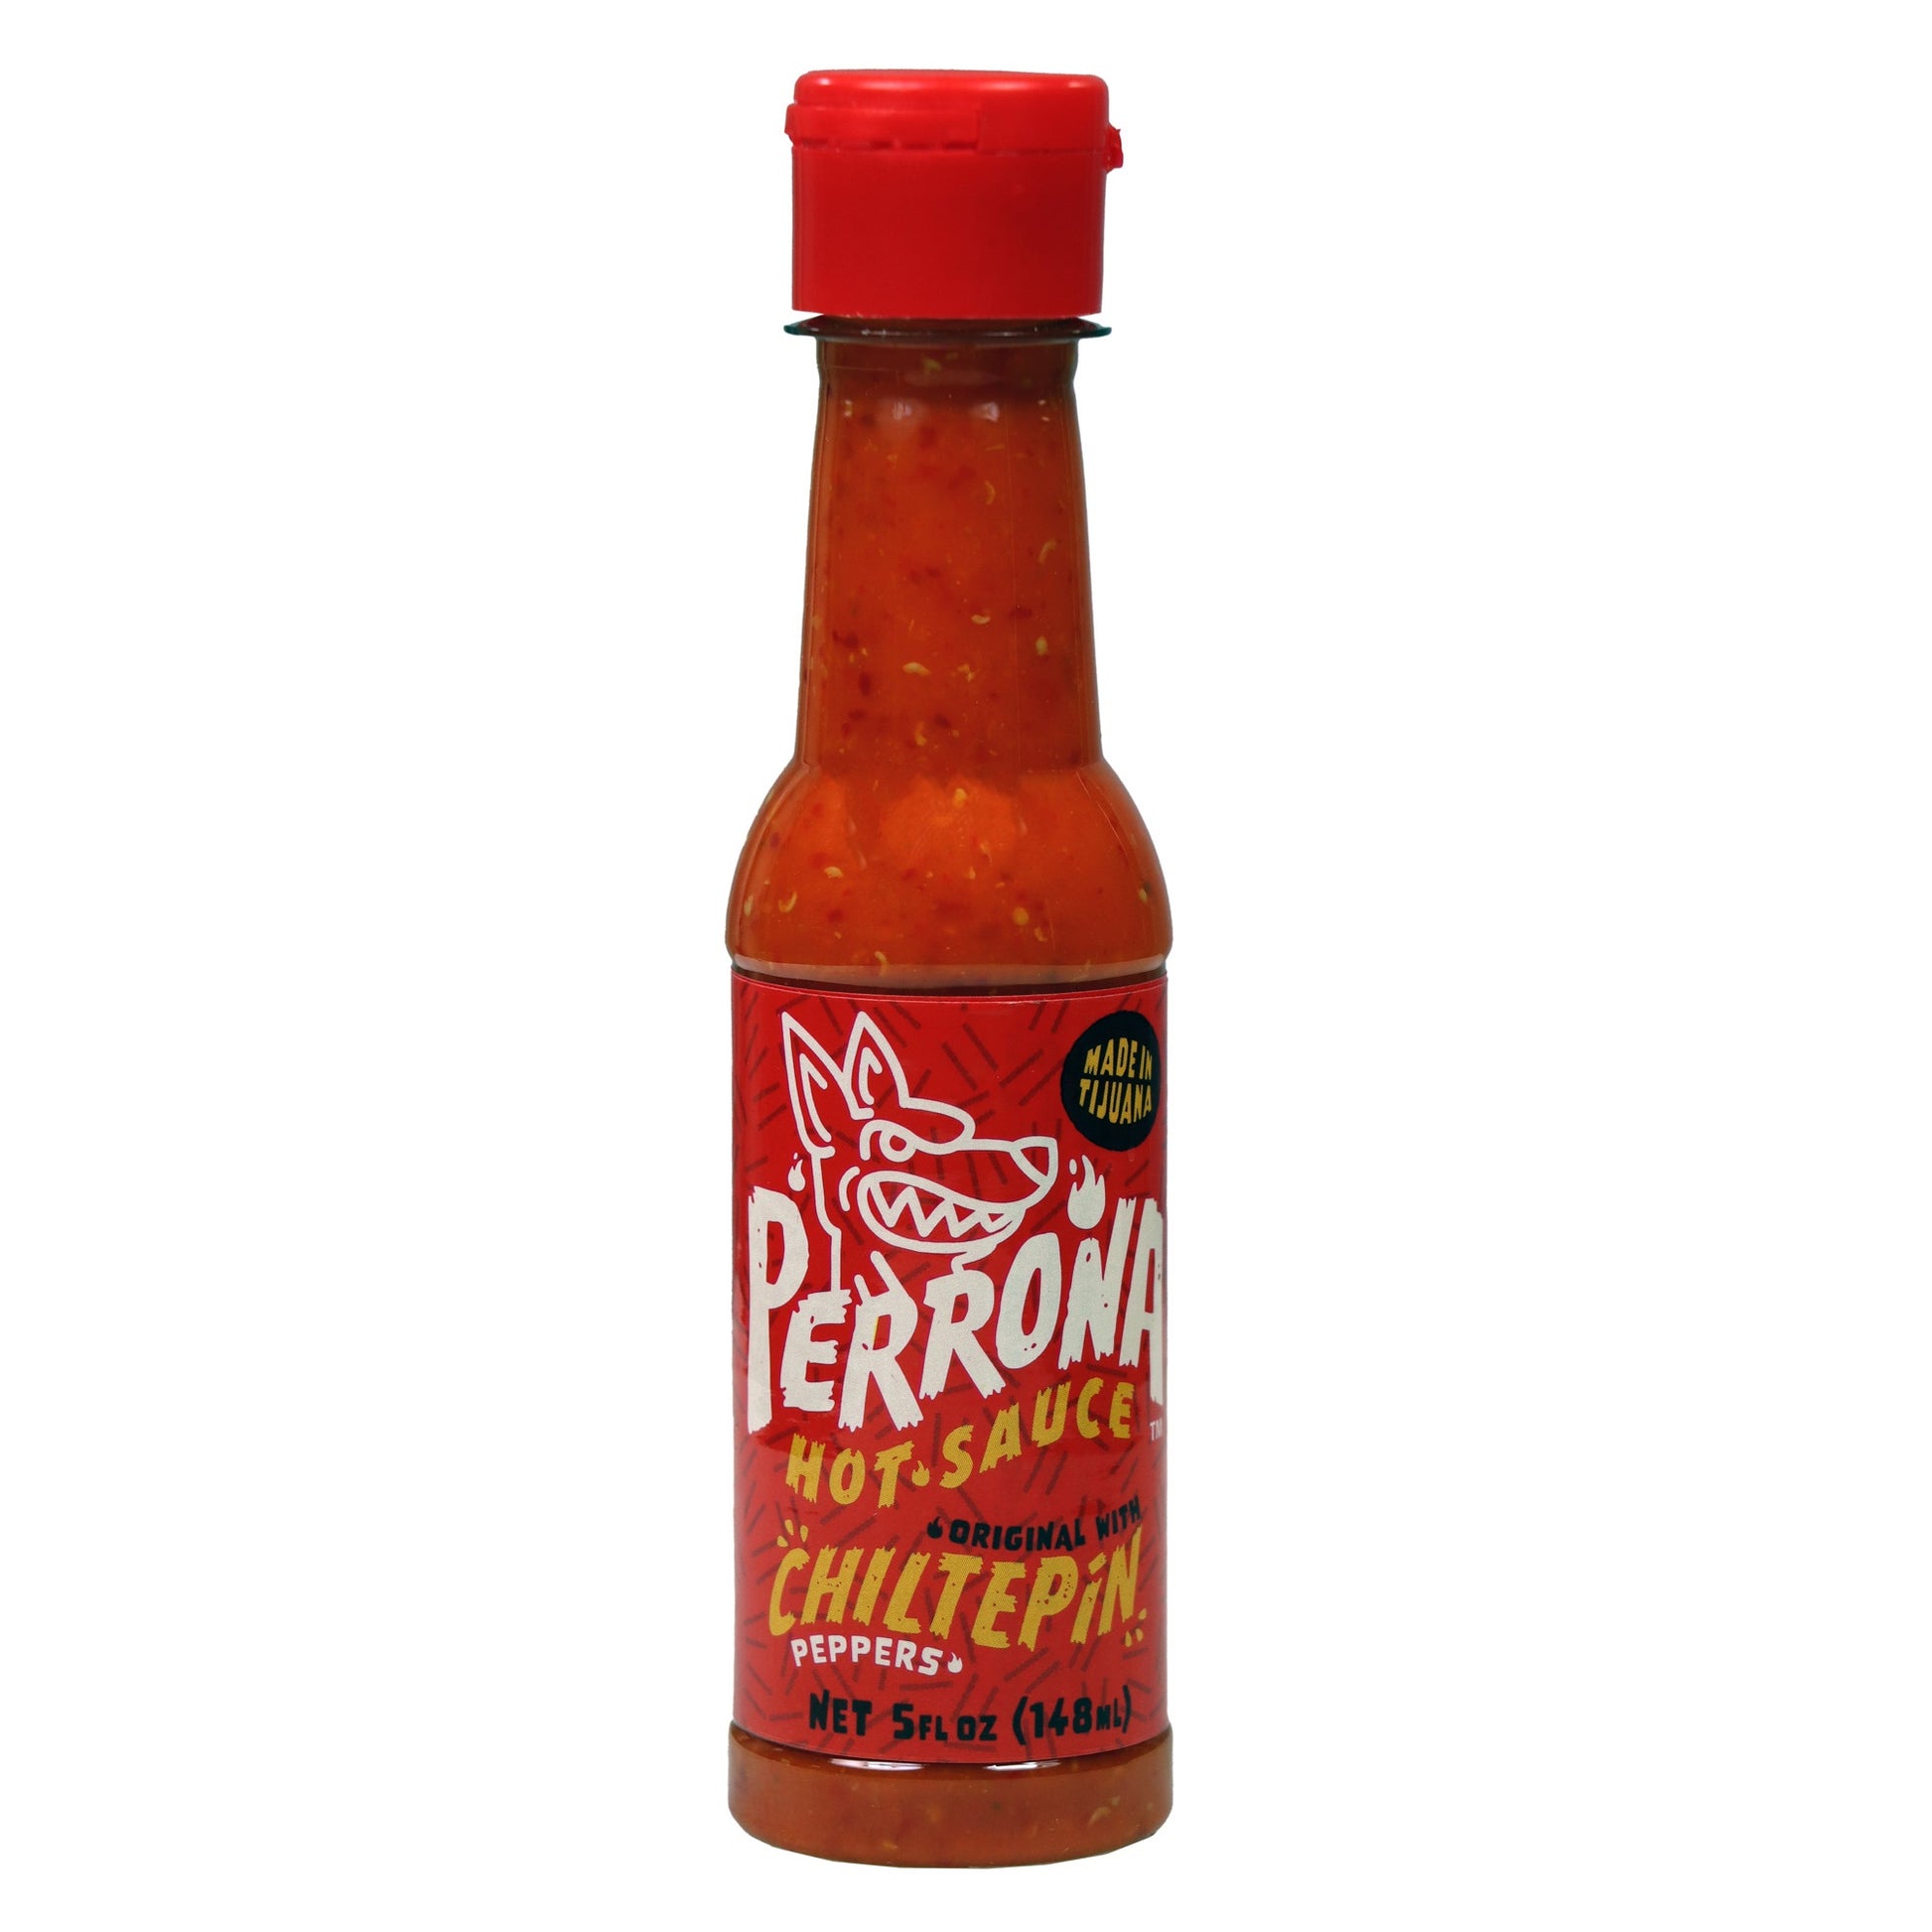 Perrona™ Chiltepin Pepper Original Hot Sauce, 5 oz - Food 4 Less